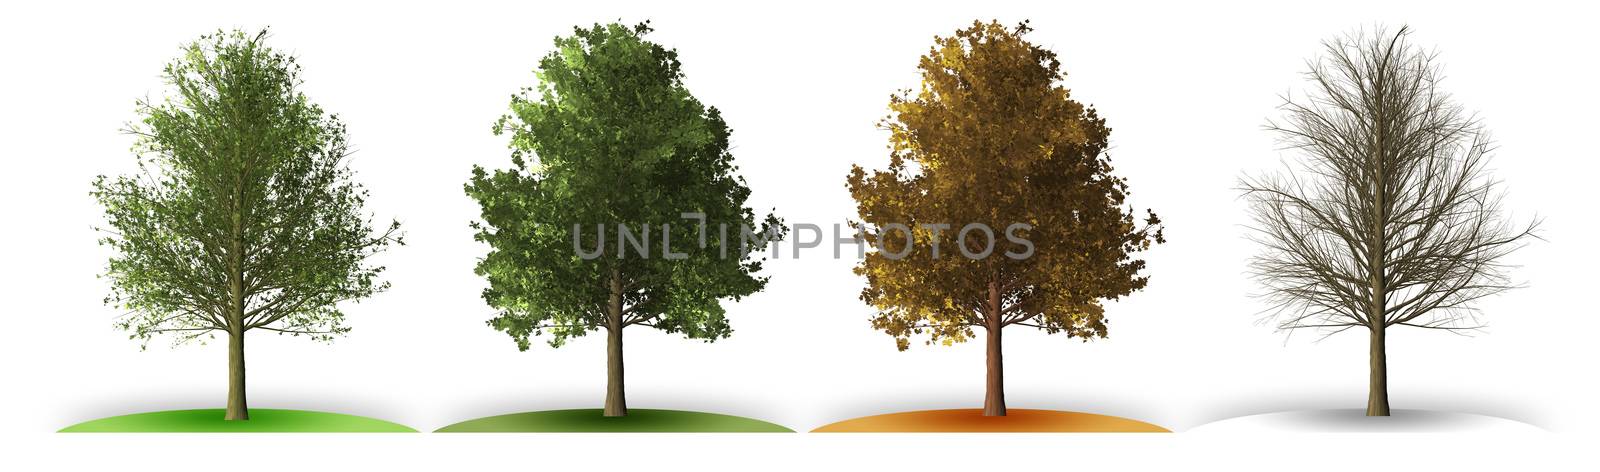 tree in four seasons by magann